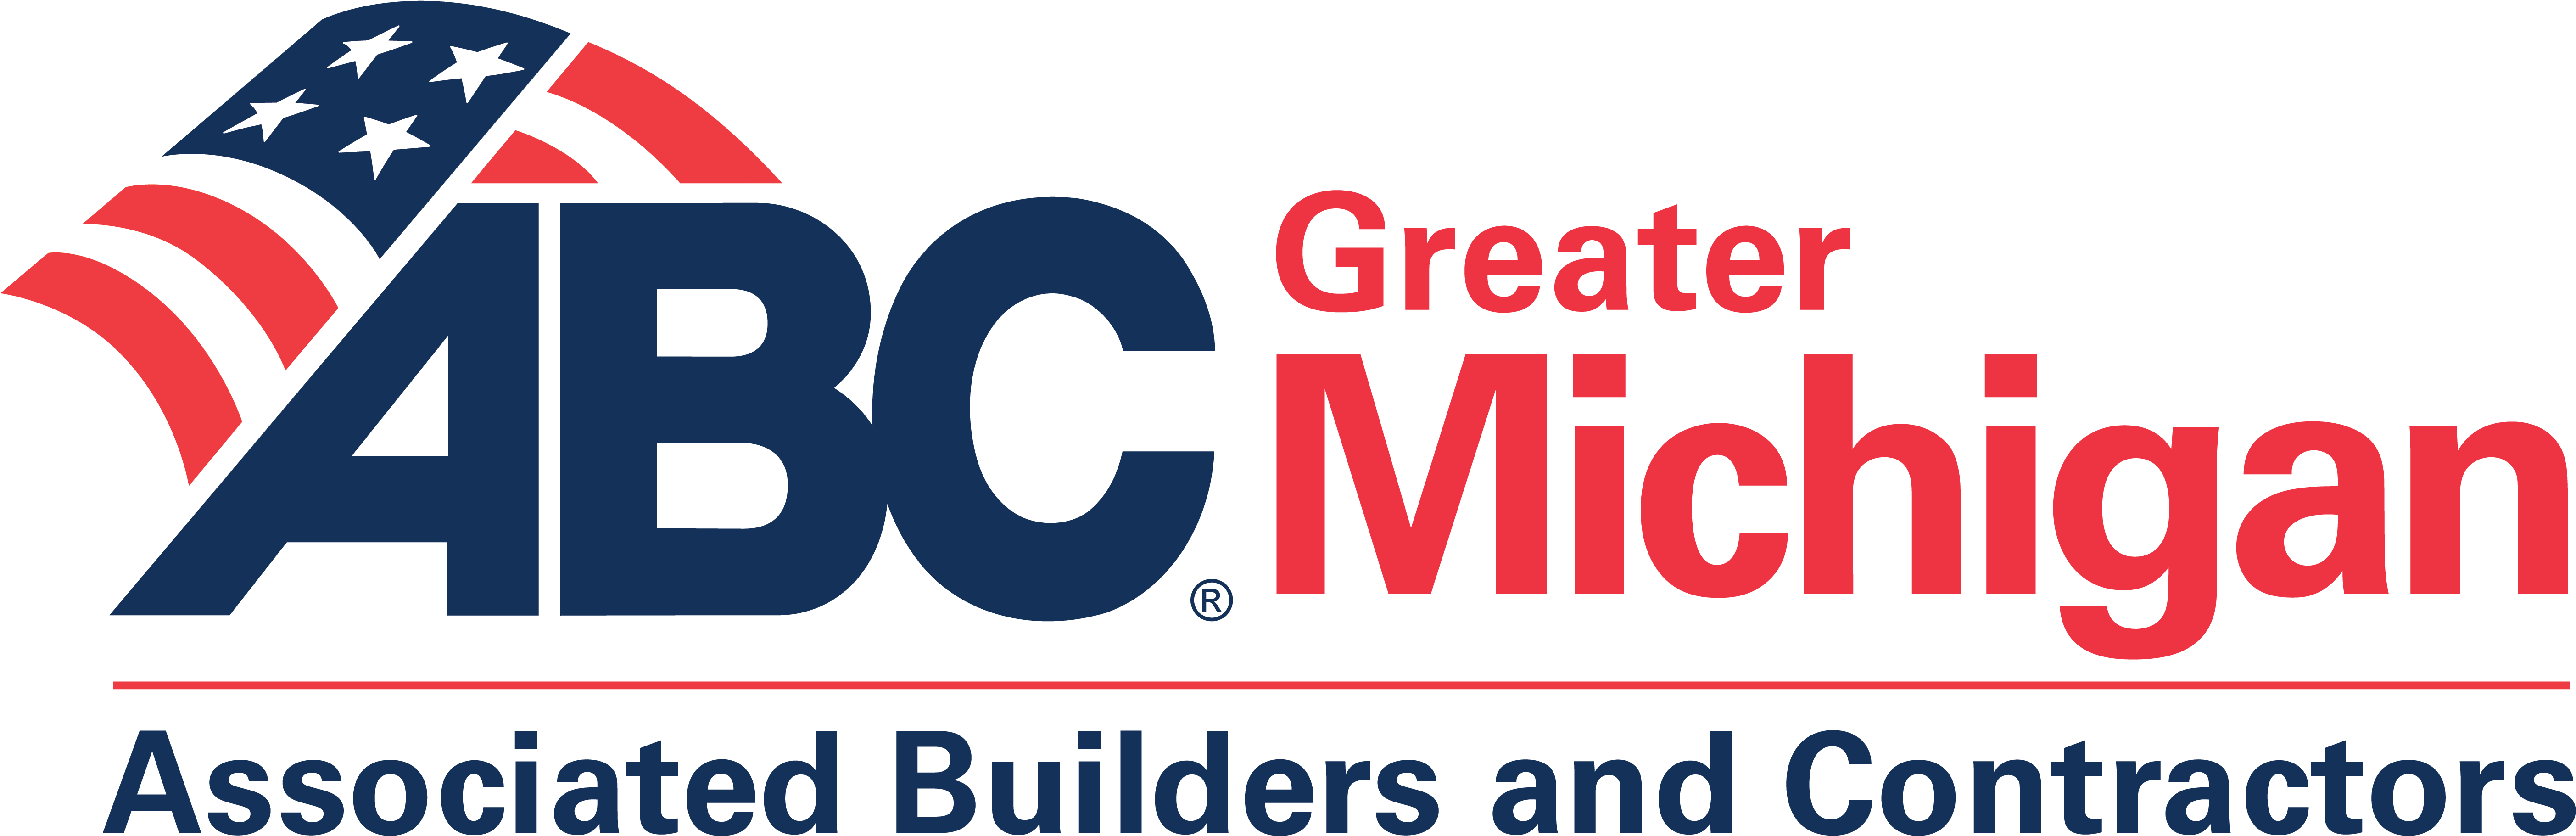 A B C Greater Michigan Logo PNG